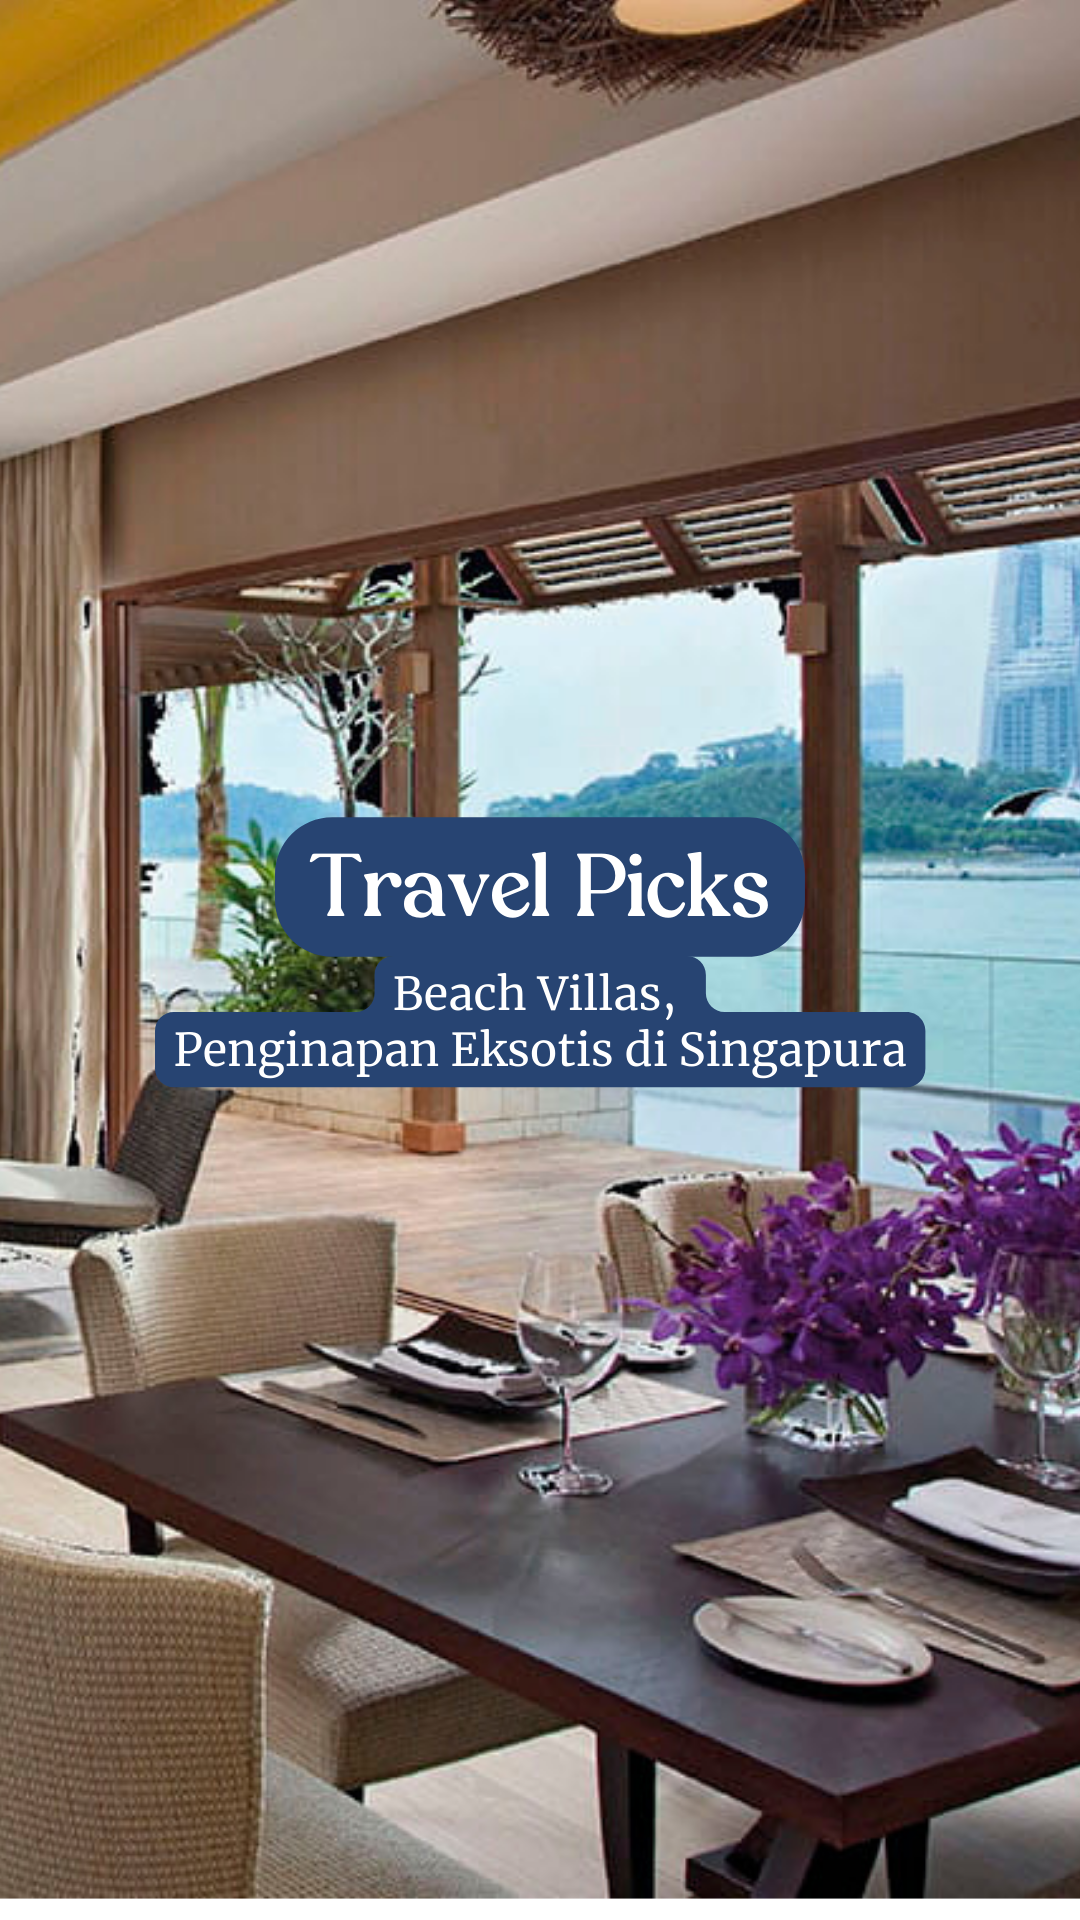 TRAVEL PICK - Beach Villas, Penginapan Eksotis di Singapura